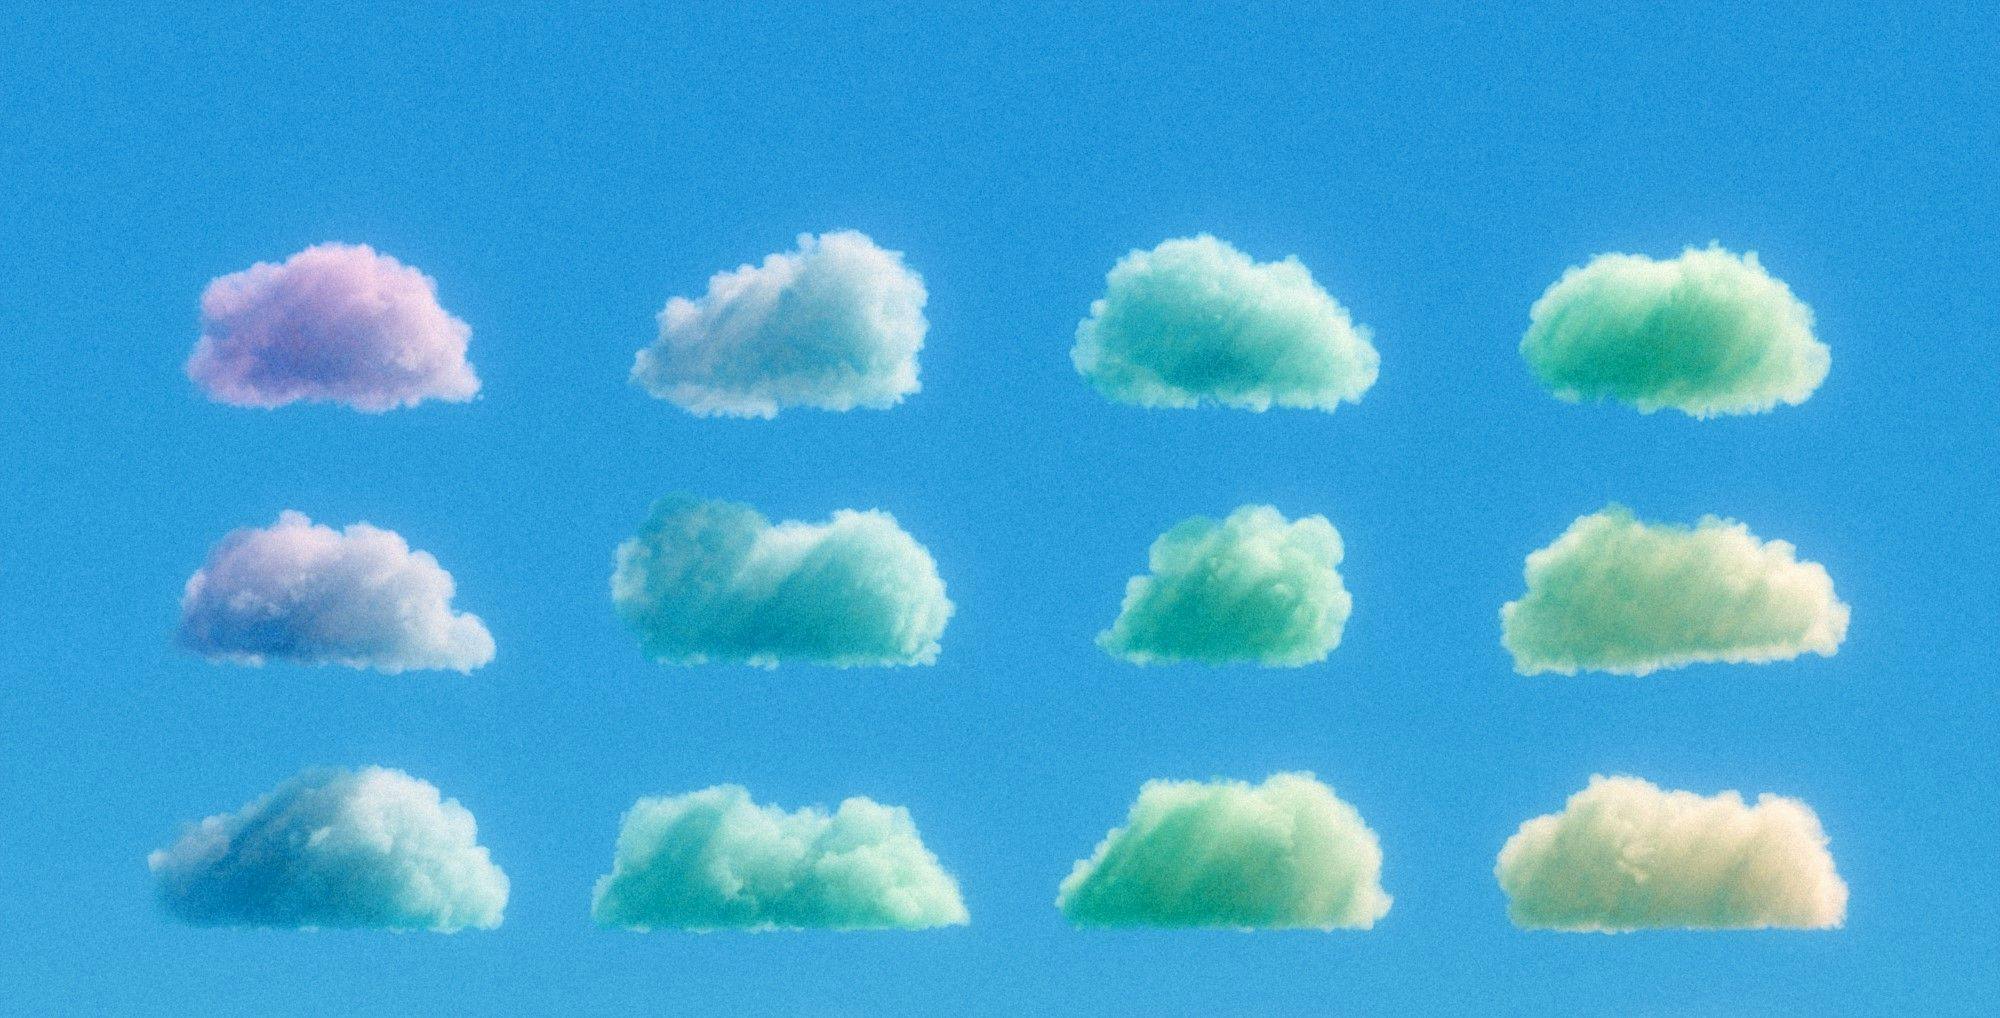 Hayden Clay's "Strange Clouds": Sculpting the Sky in Digital Dimensions